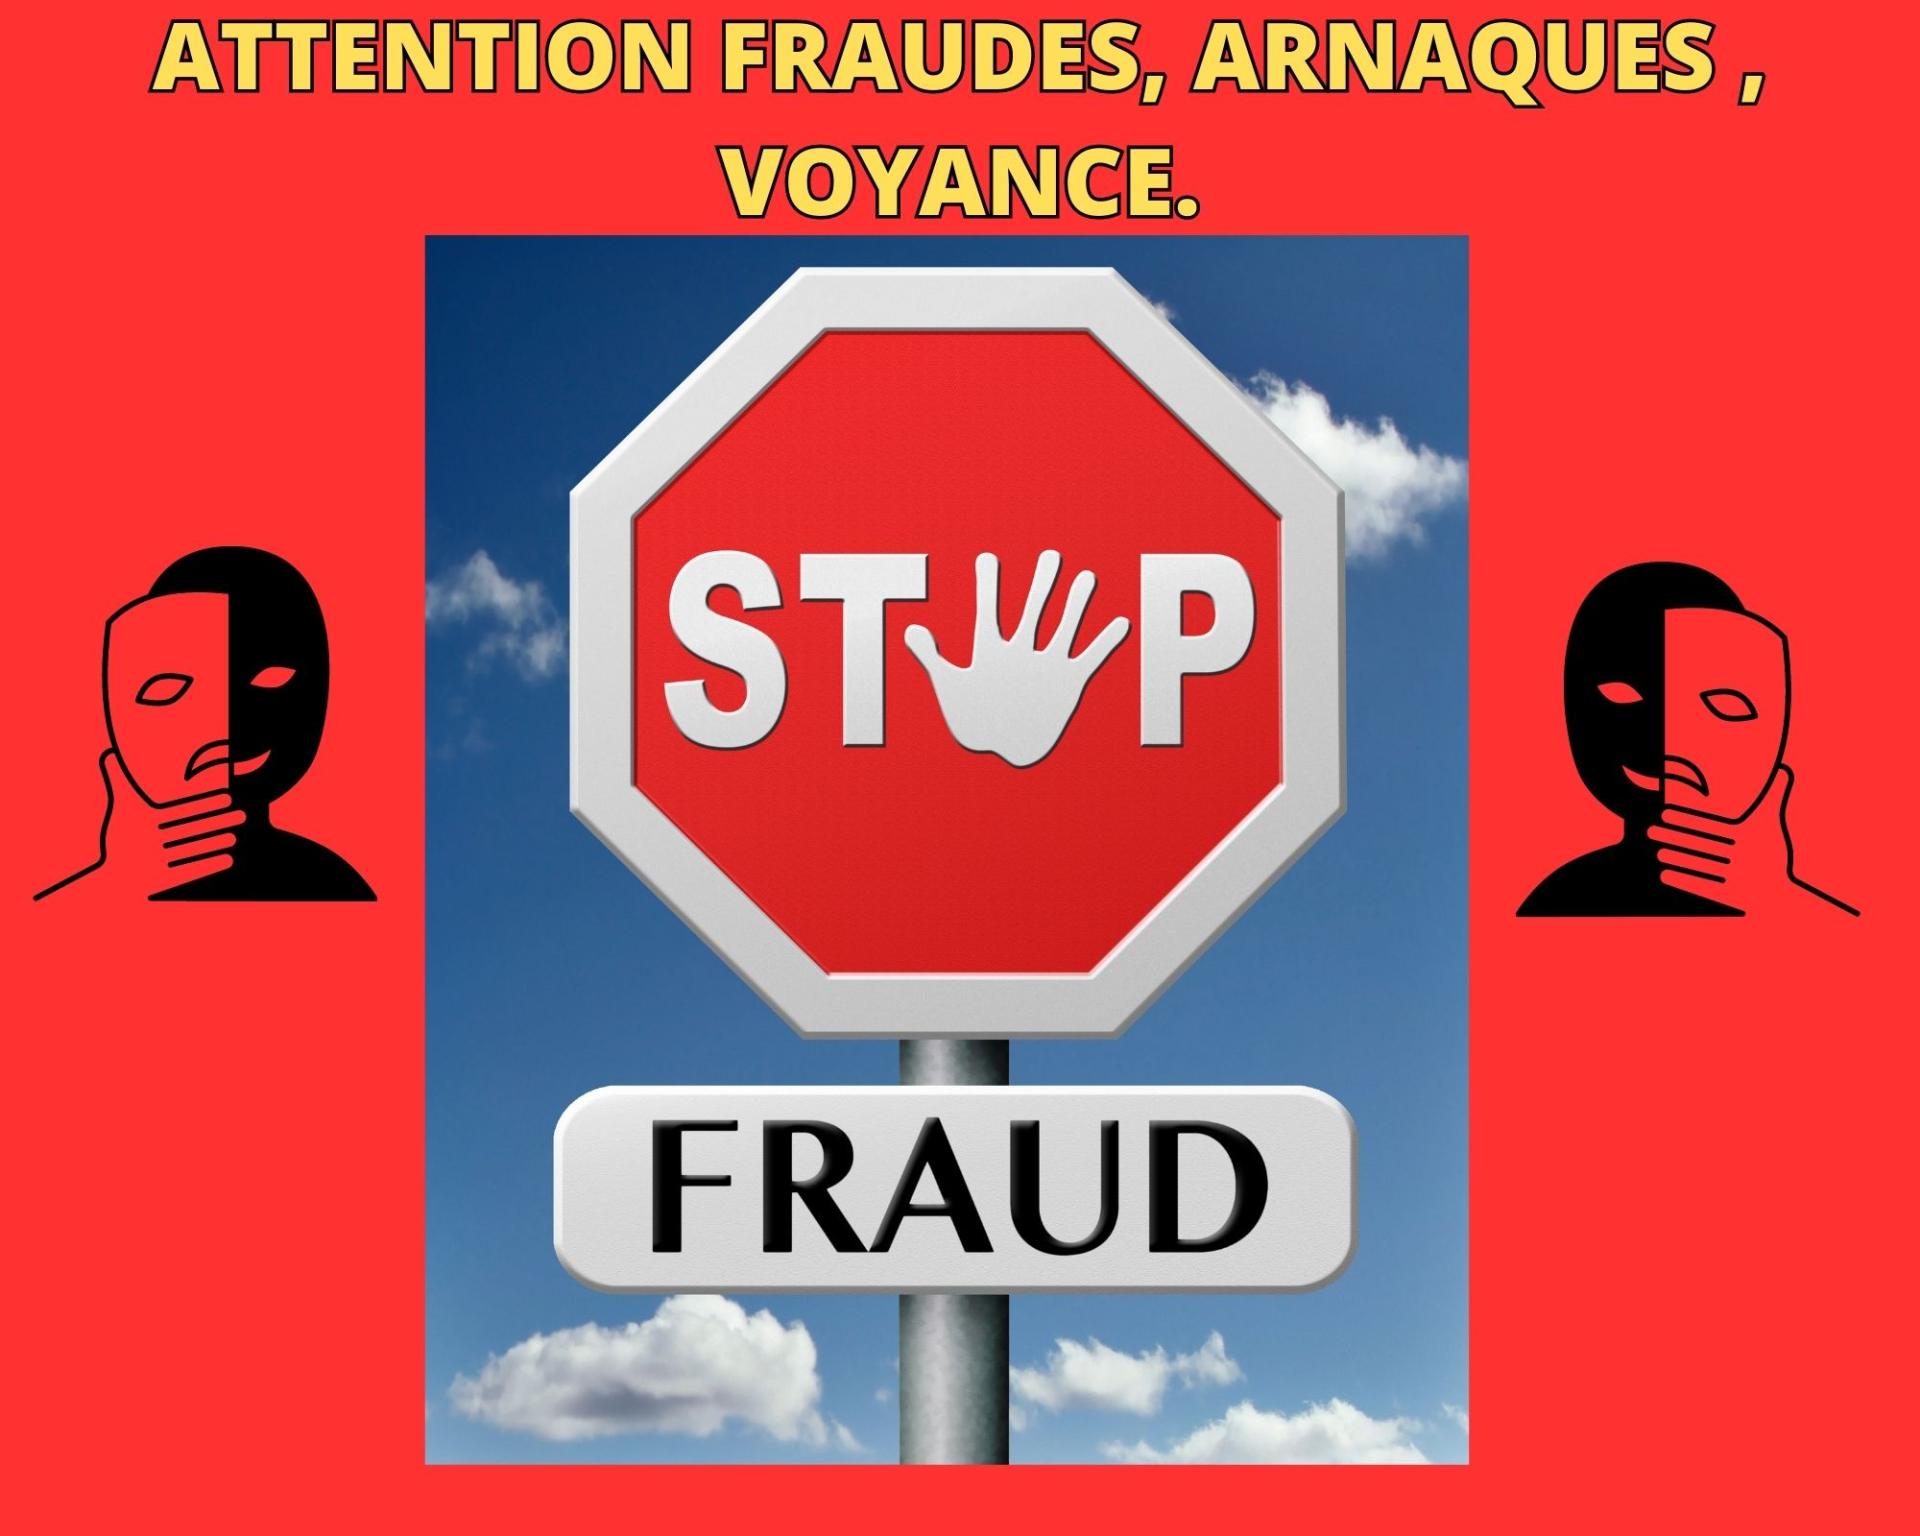 Attention fraudes arnaques voyance